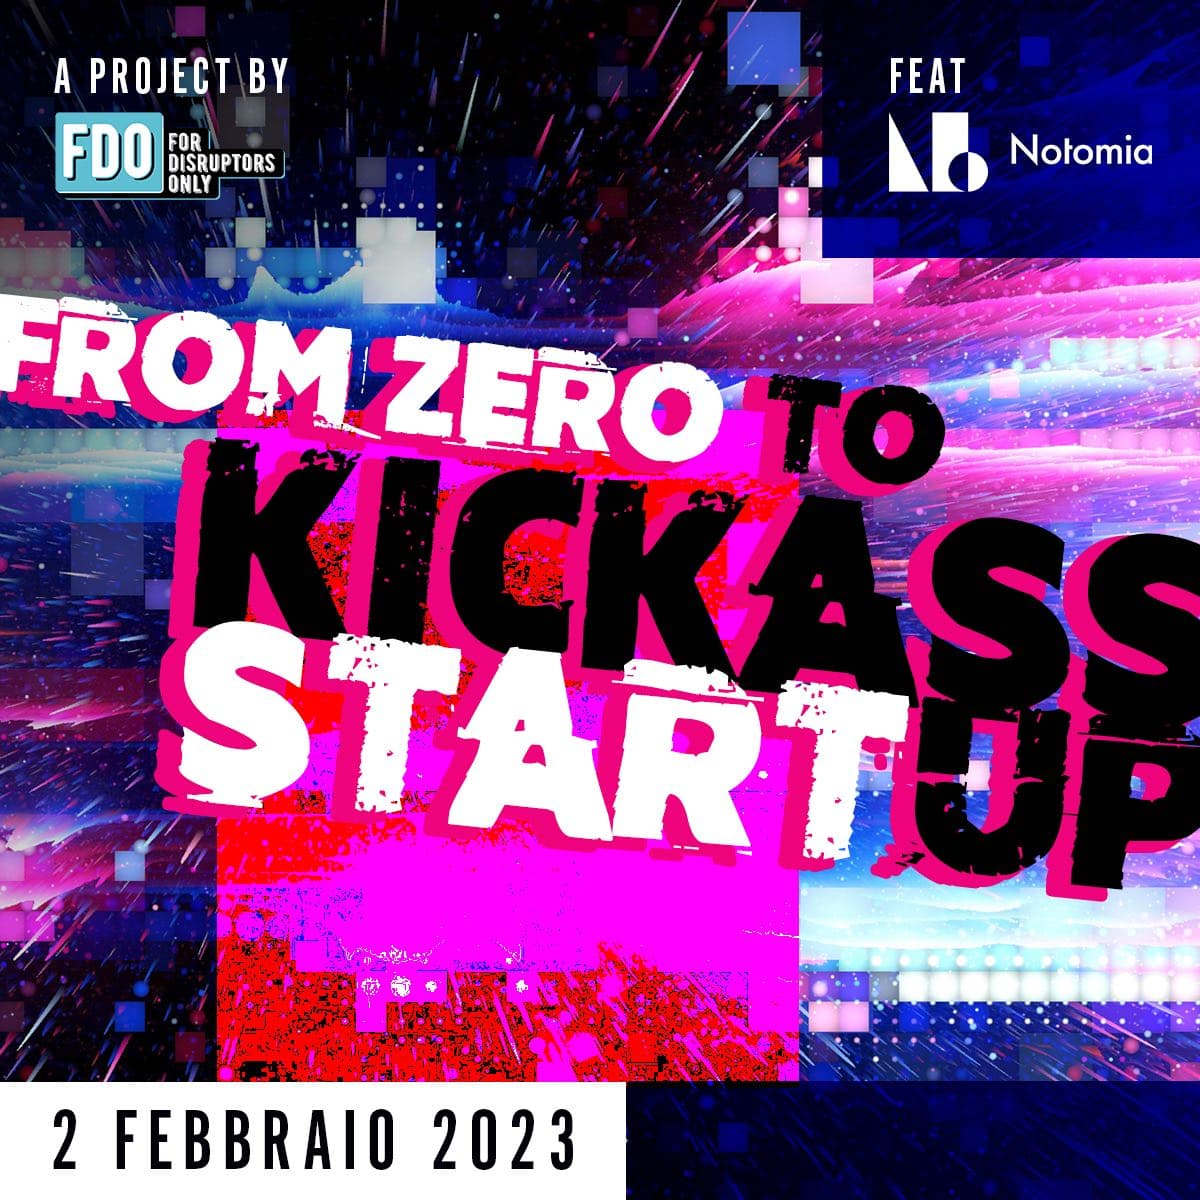 fdo from zero to kickass startup milano luiss hub